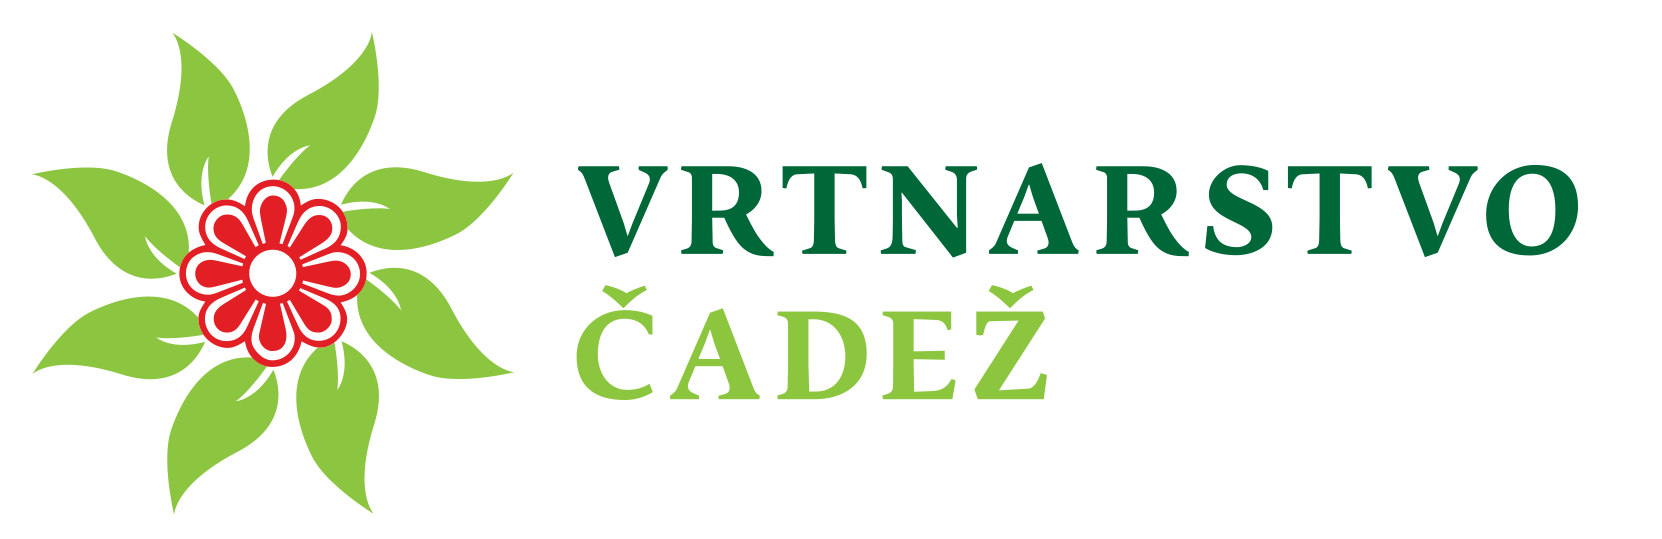 vrtnarstvo-cadez-logo-spletna-stran